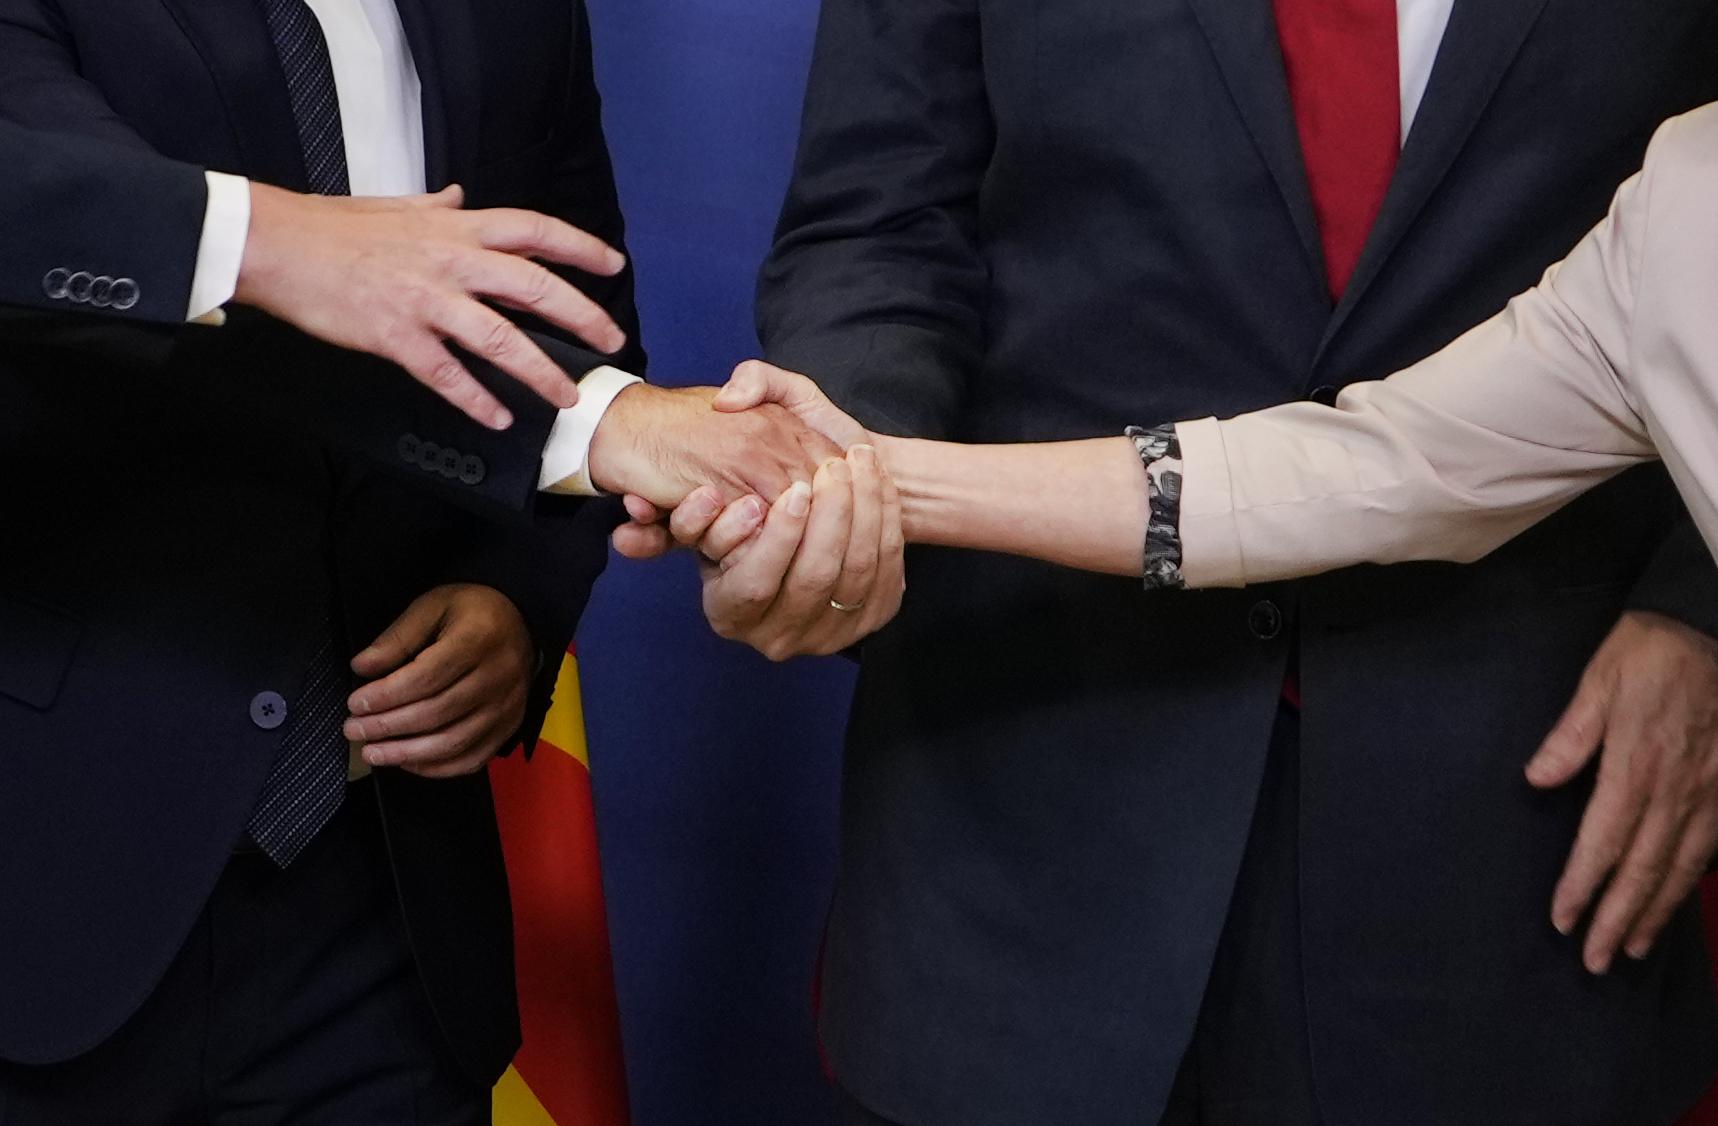 as-europe-s-leaders-meet-some-fear-for-eu-membership-hopes